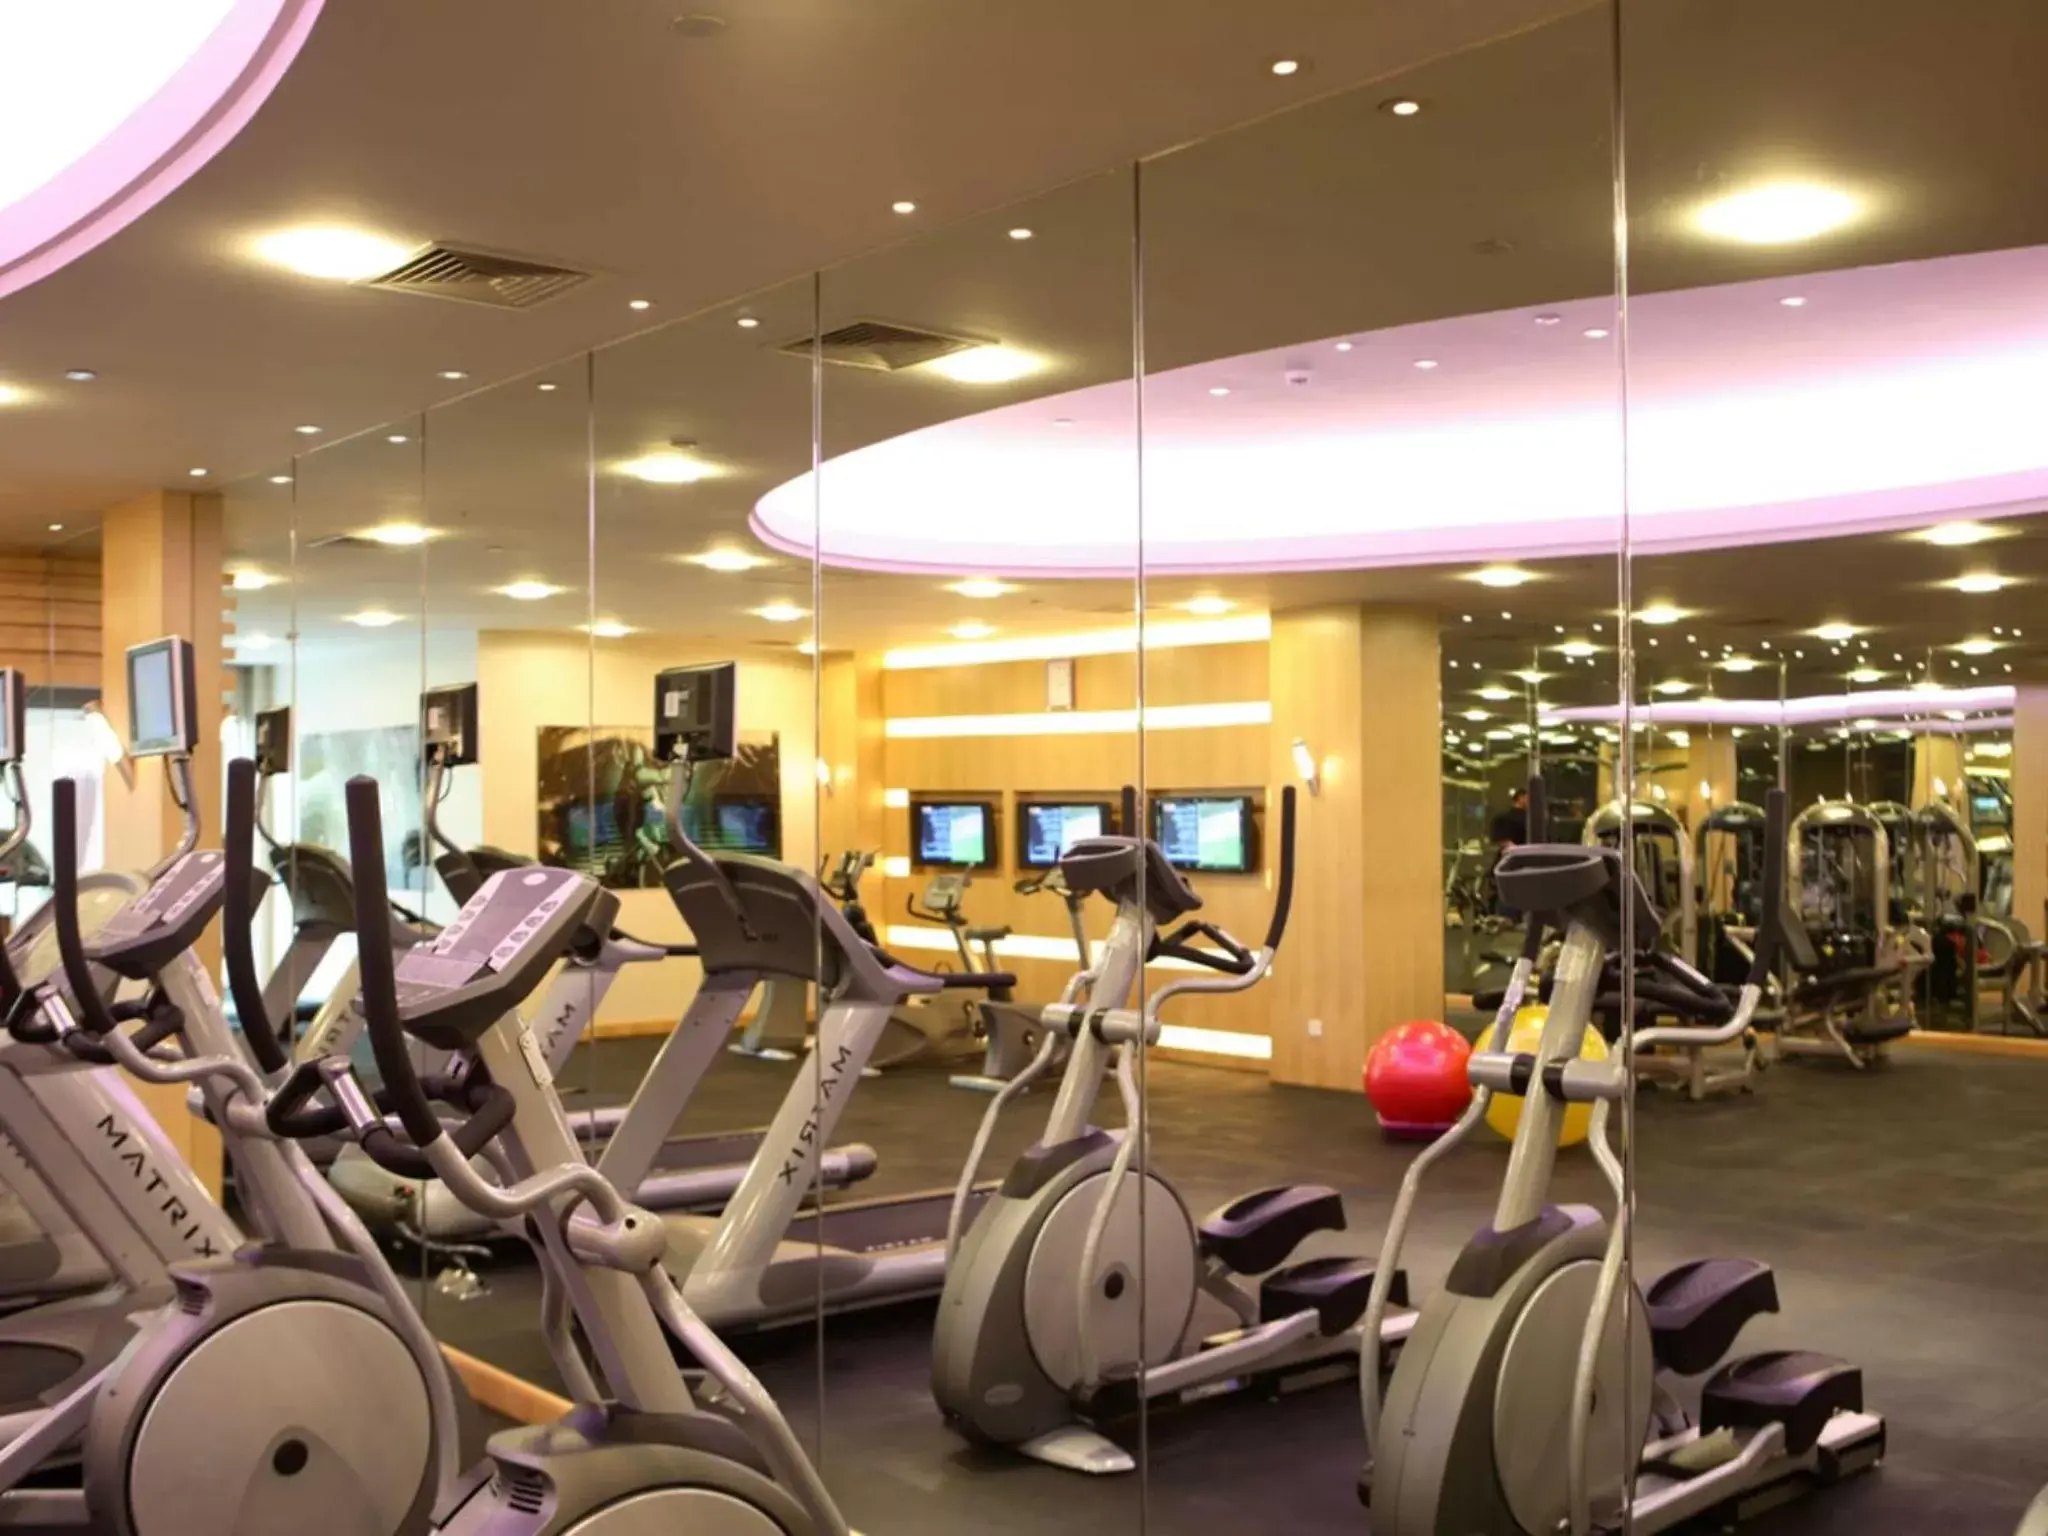 Fitness centre/facilities, Fitness Center/Facilities in Beijing Hotel NUO Forbidden City